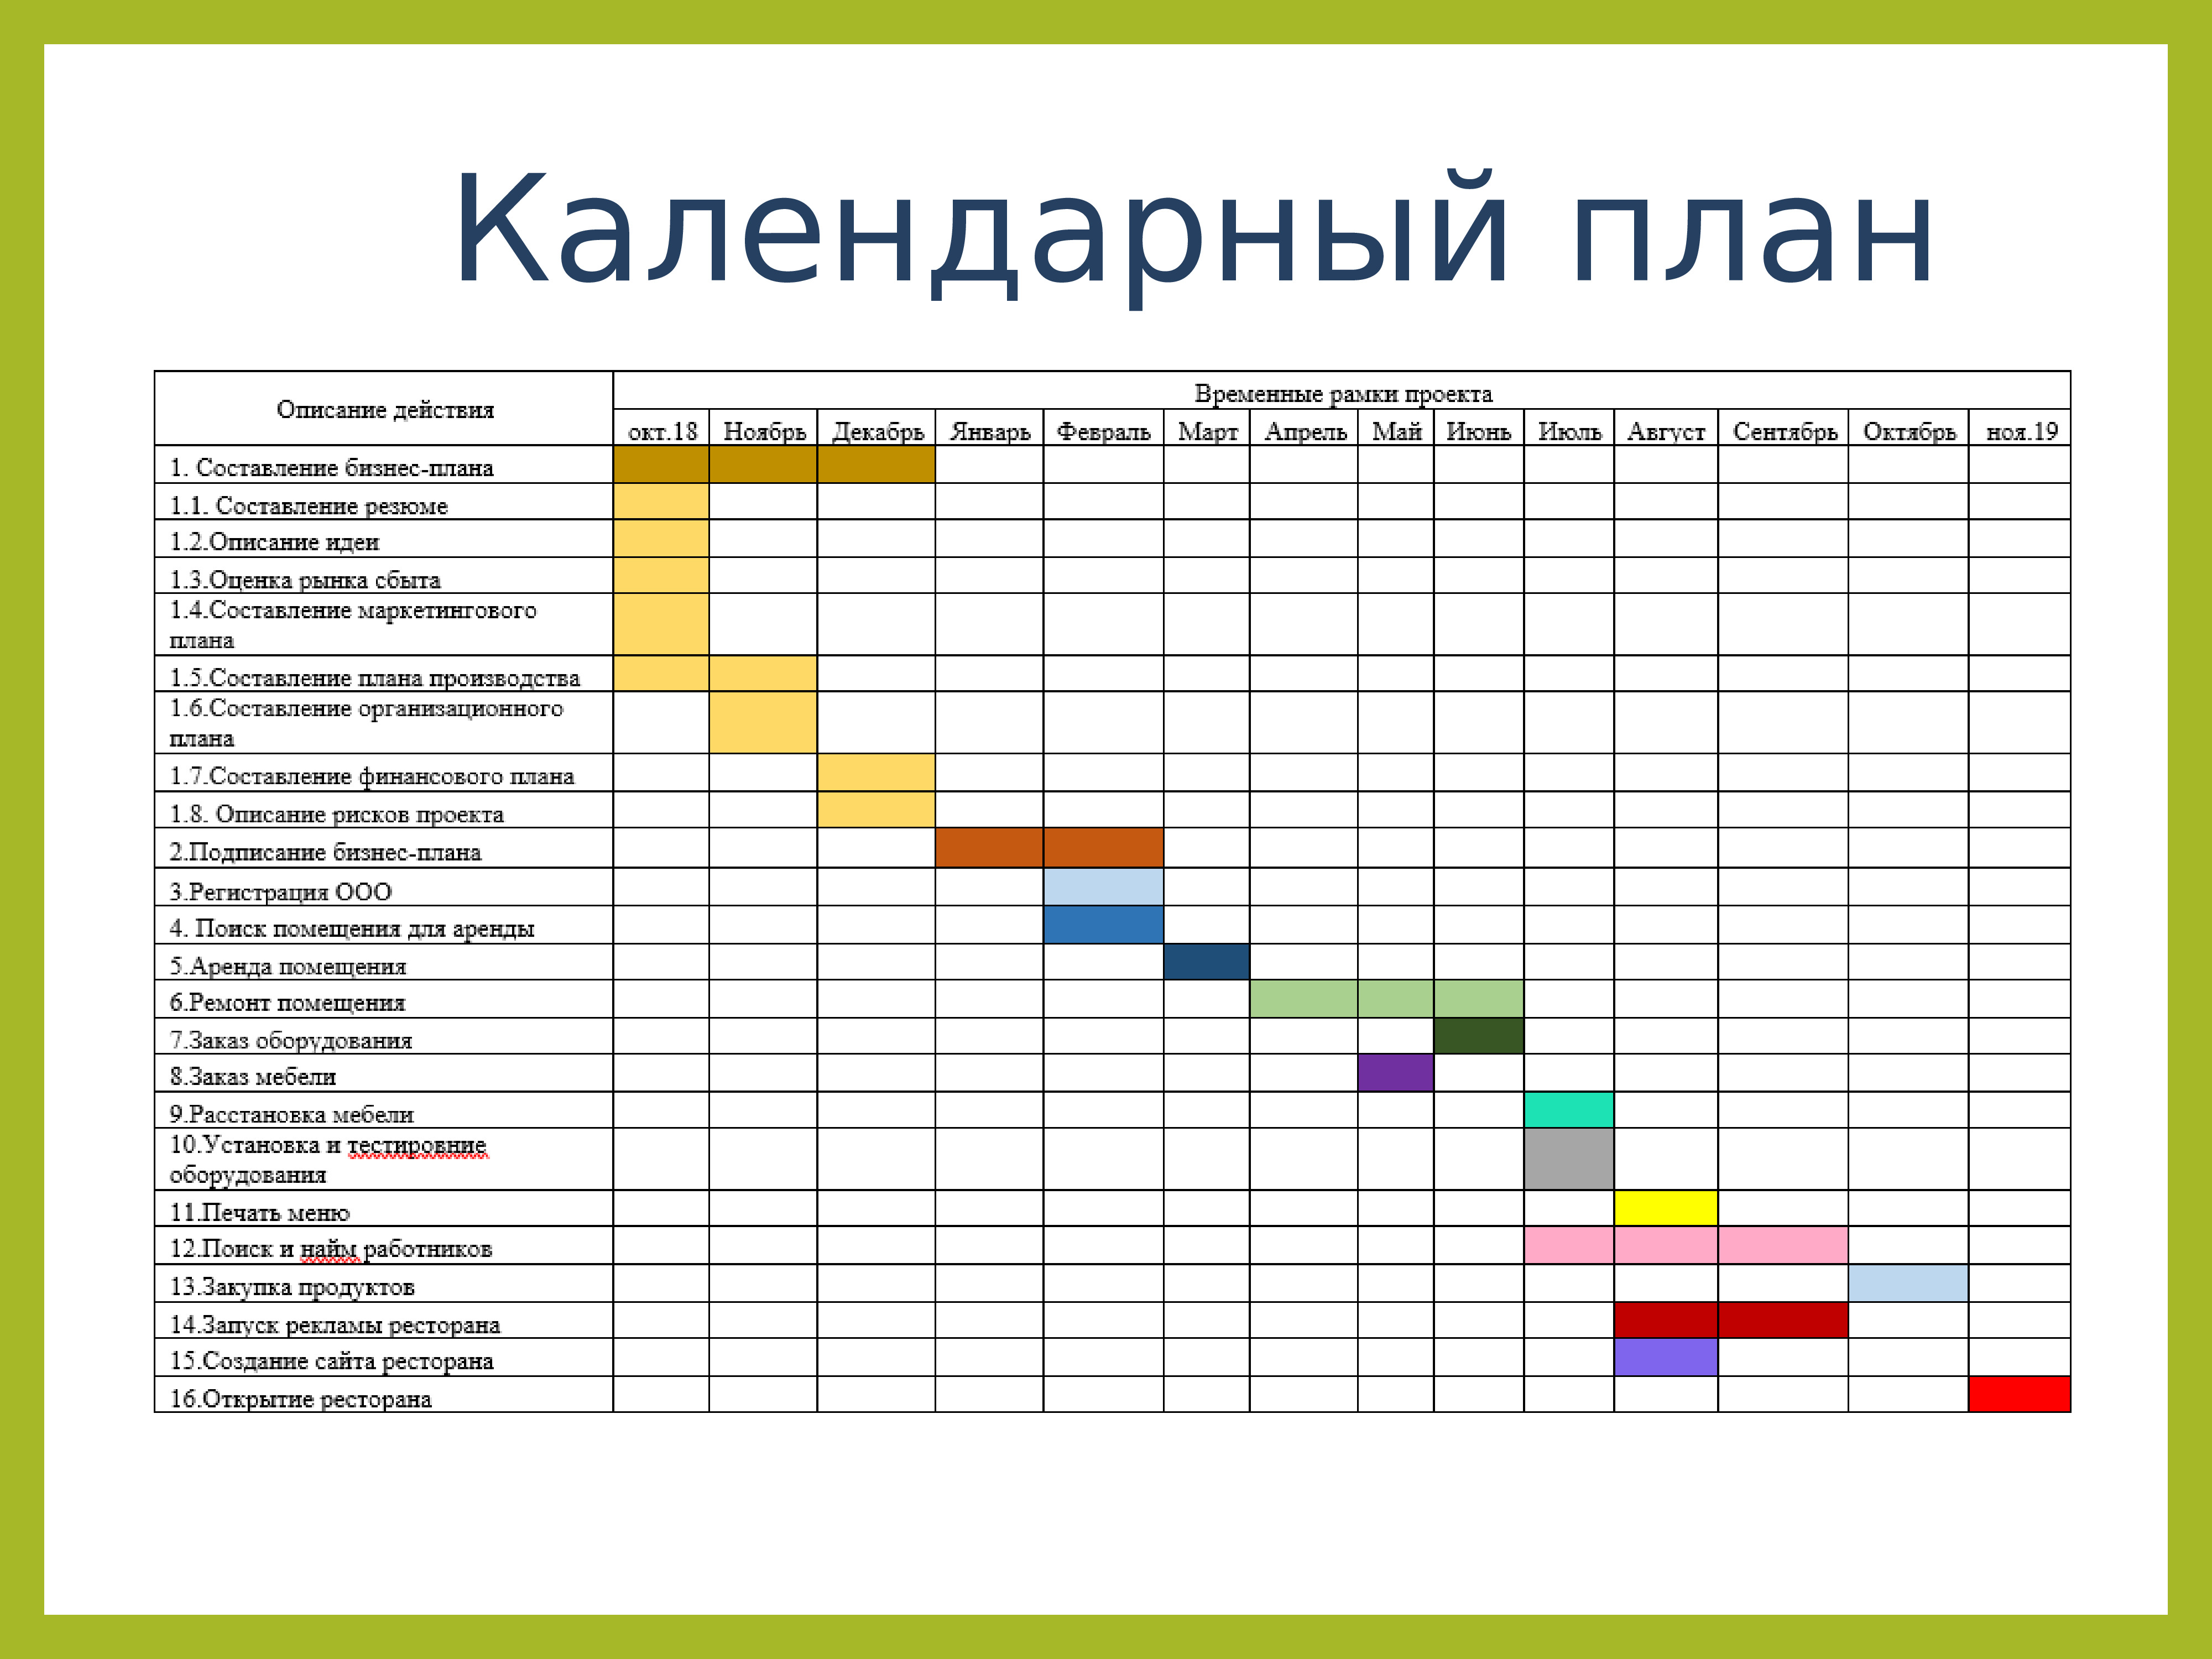 Календарный план график реализации проекта - 90 фото